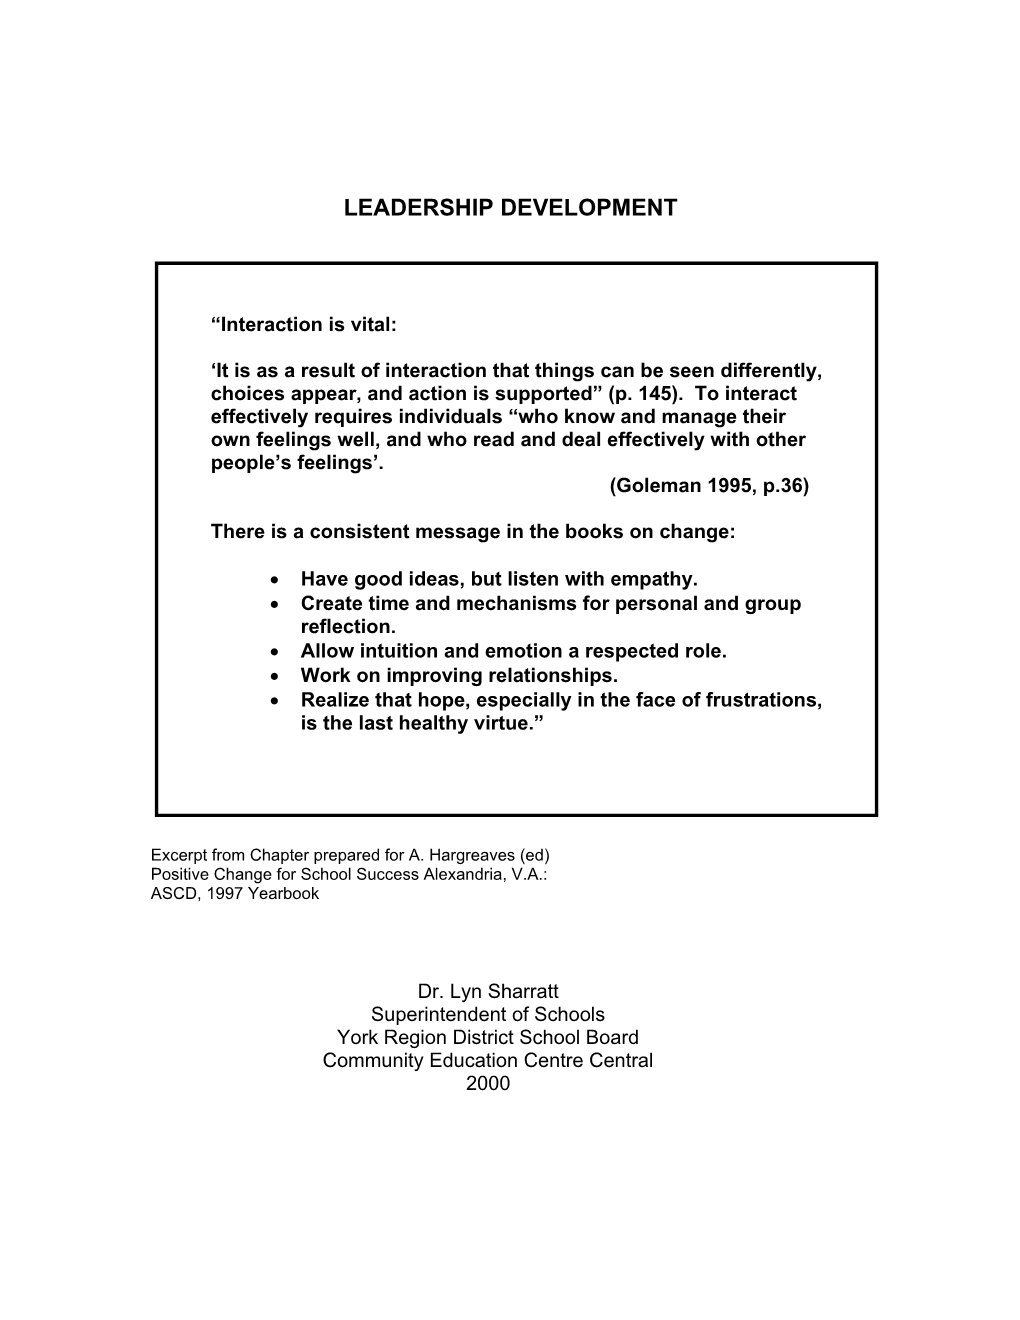 Leadership in the York Region District School Board